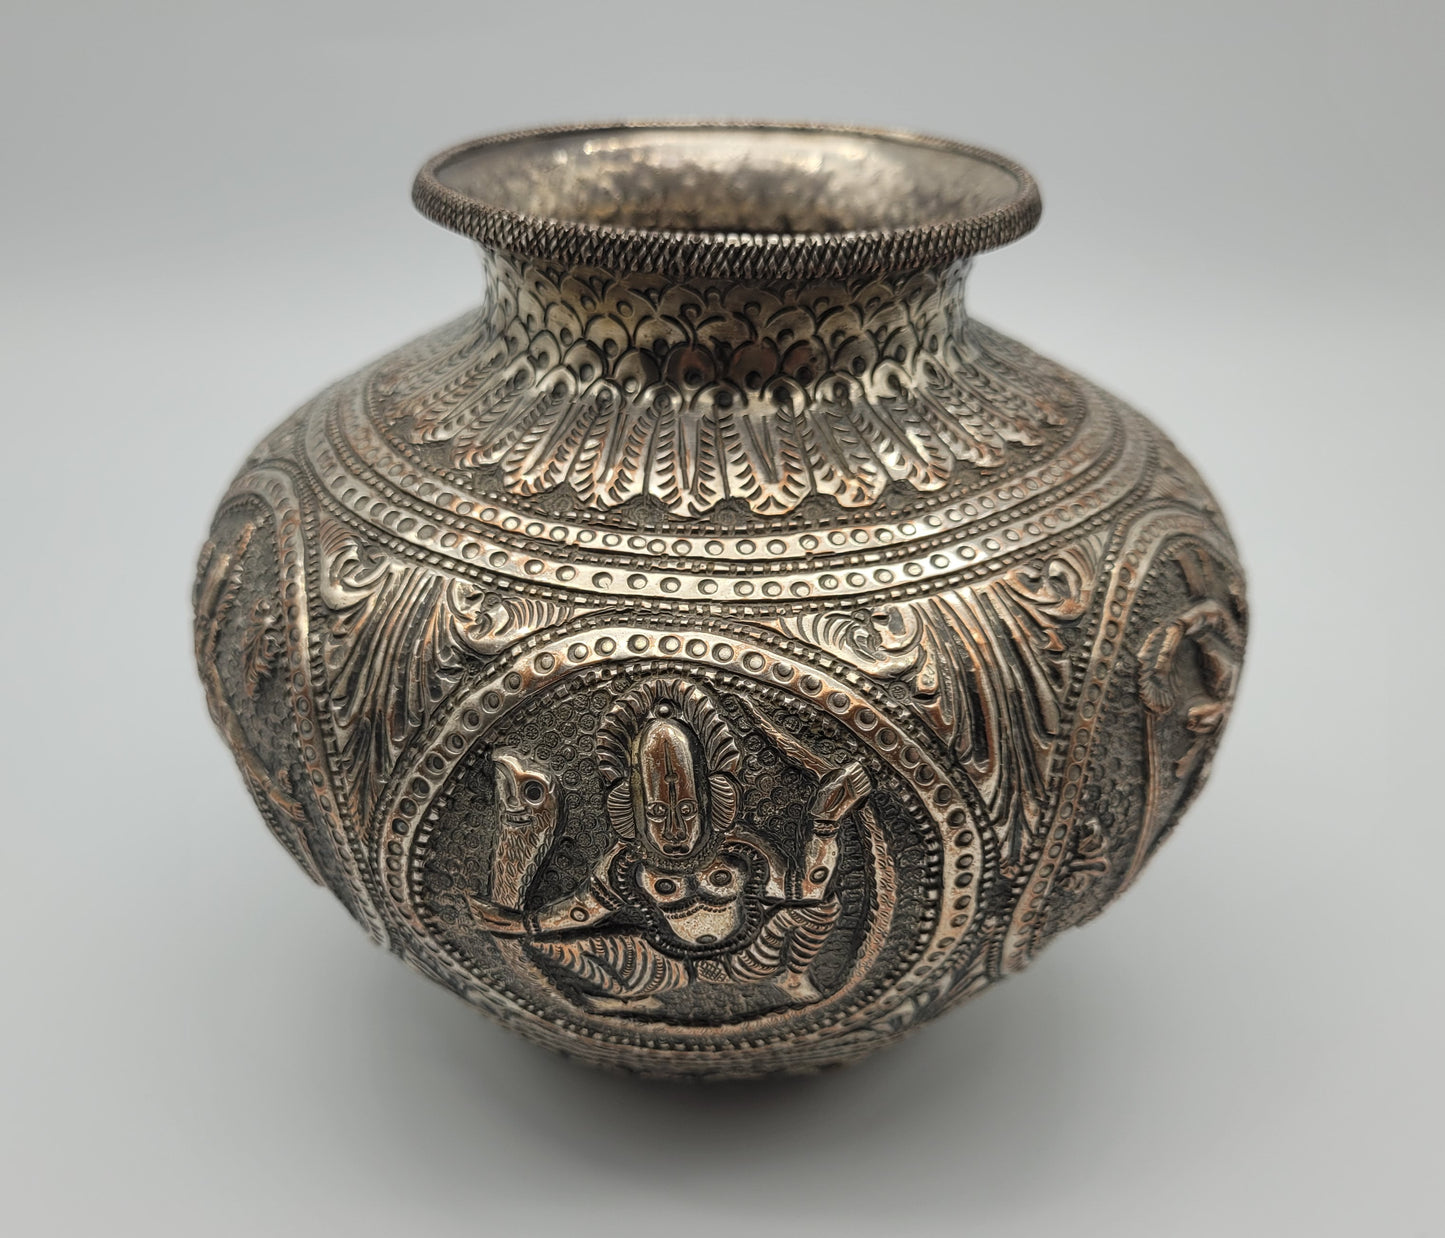 Antique Asian / Oriental White Metal Jar / Vase 19th Century Hand Decorated